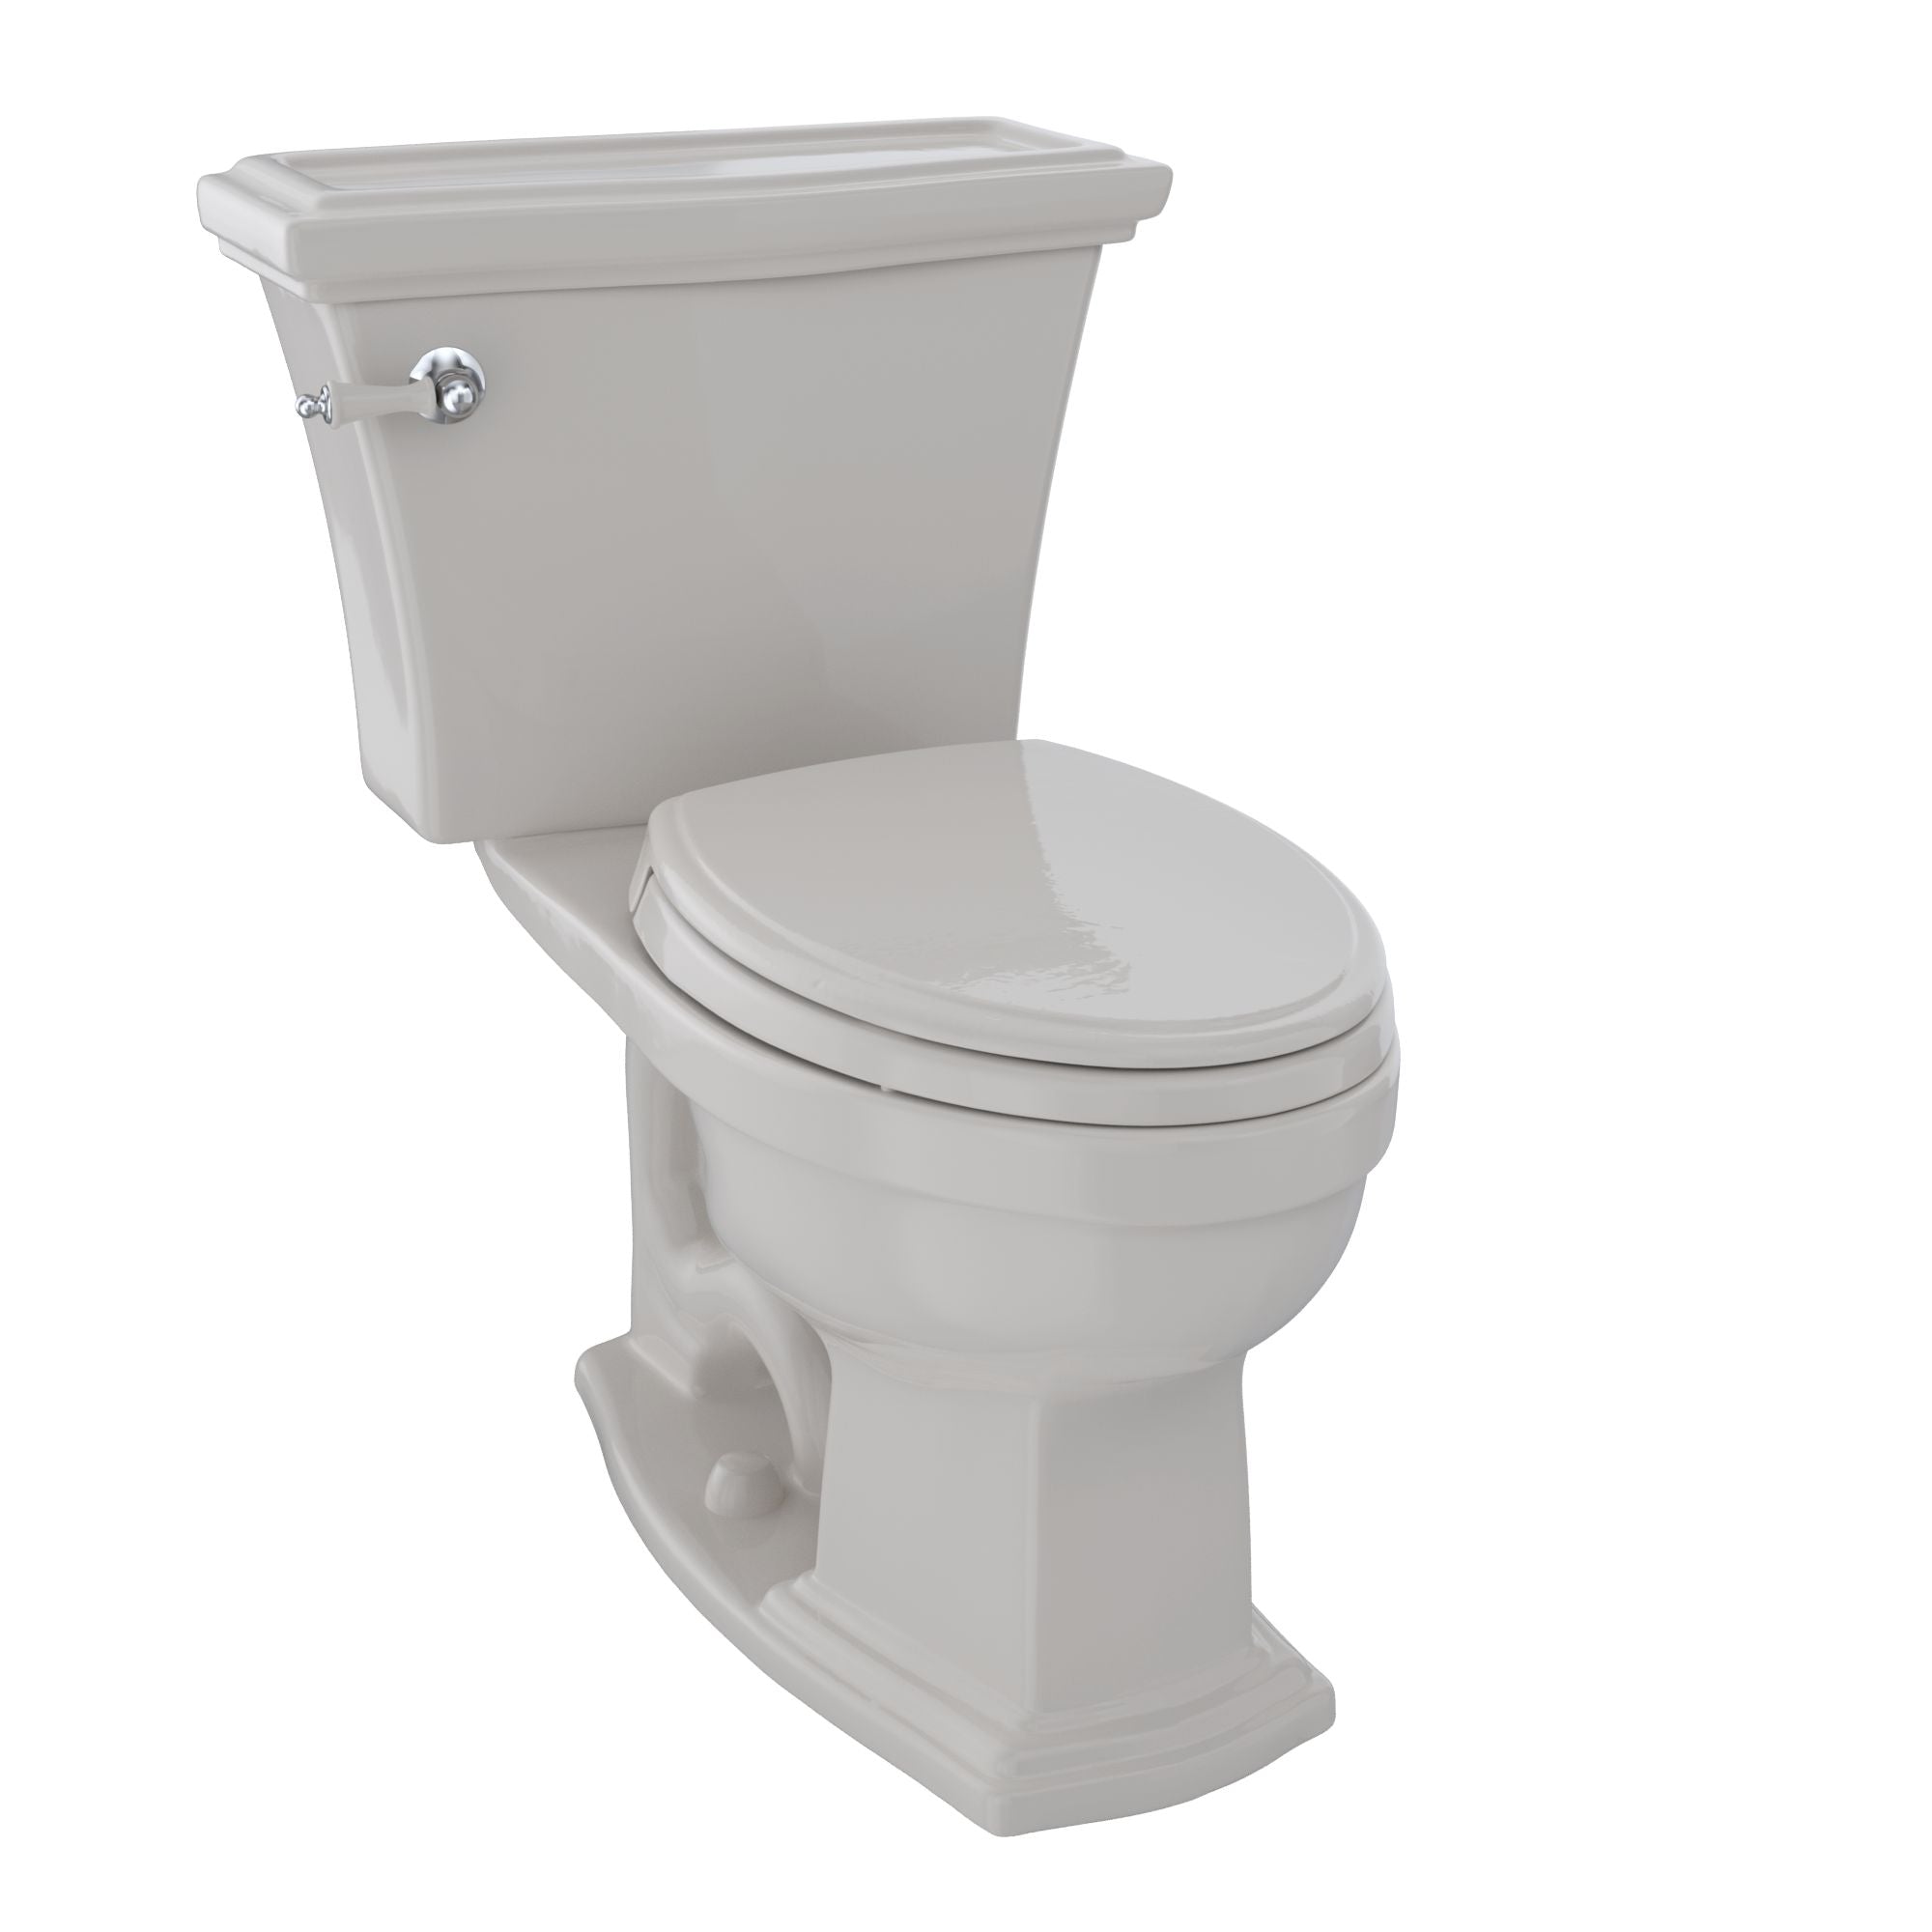 Toto Eco Clayton Two-piece Toilet 1.28 GPF Elongated Bowl